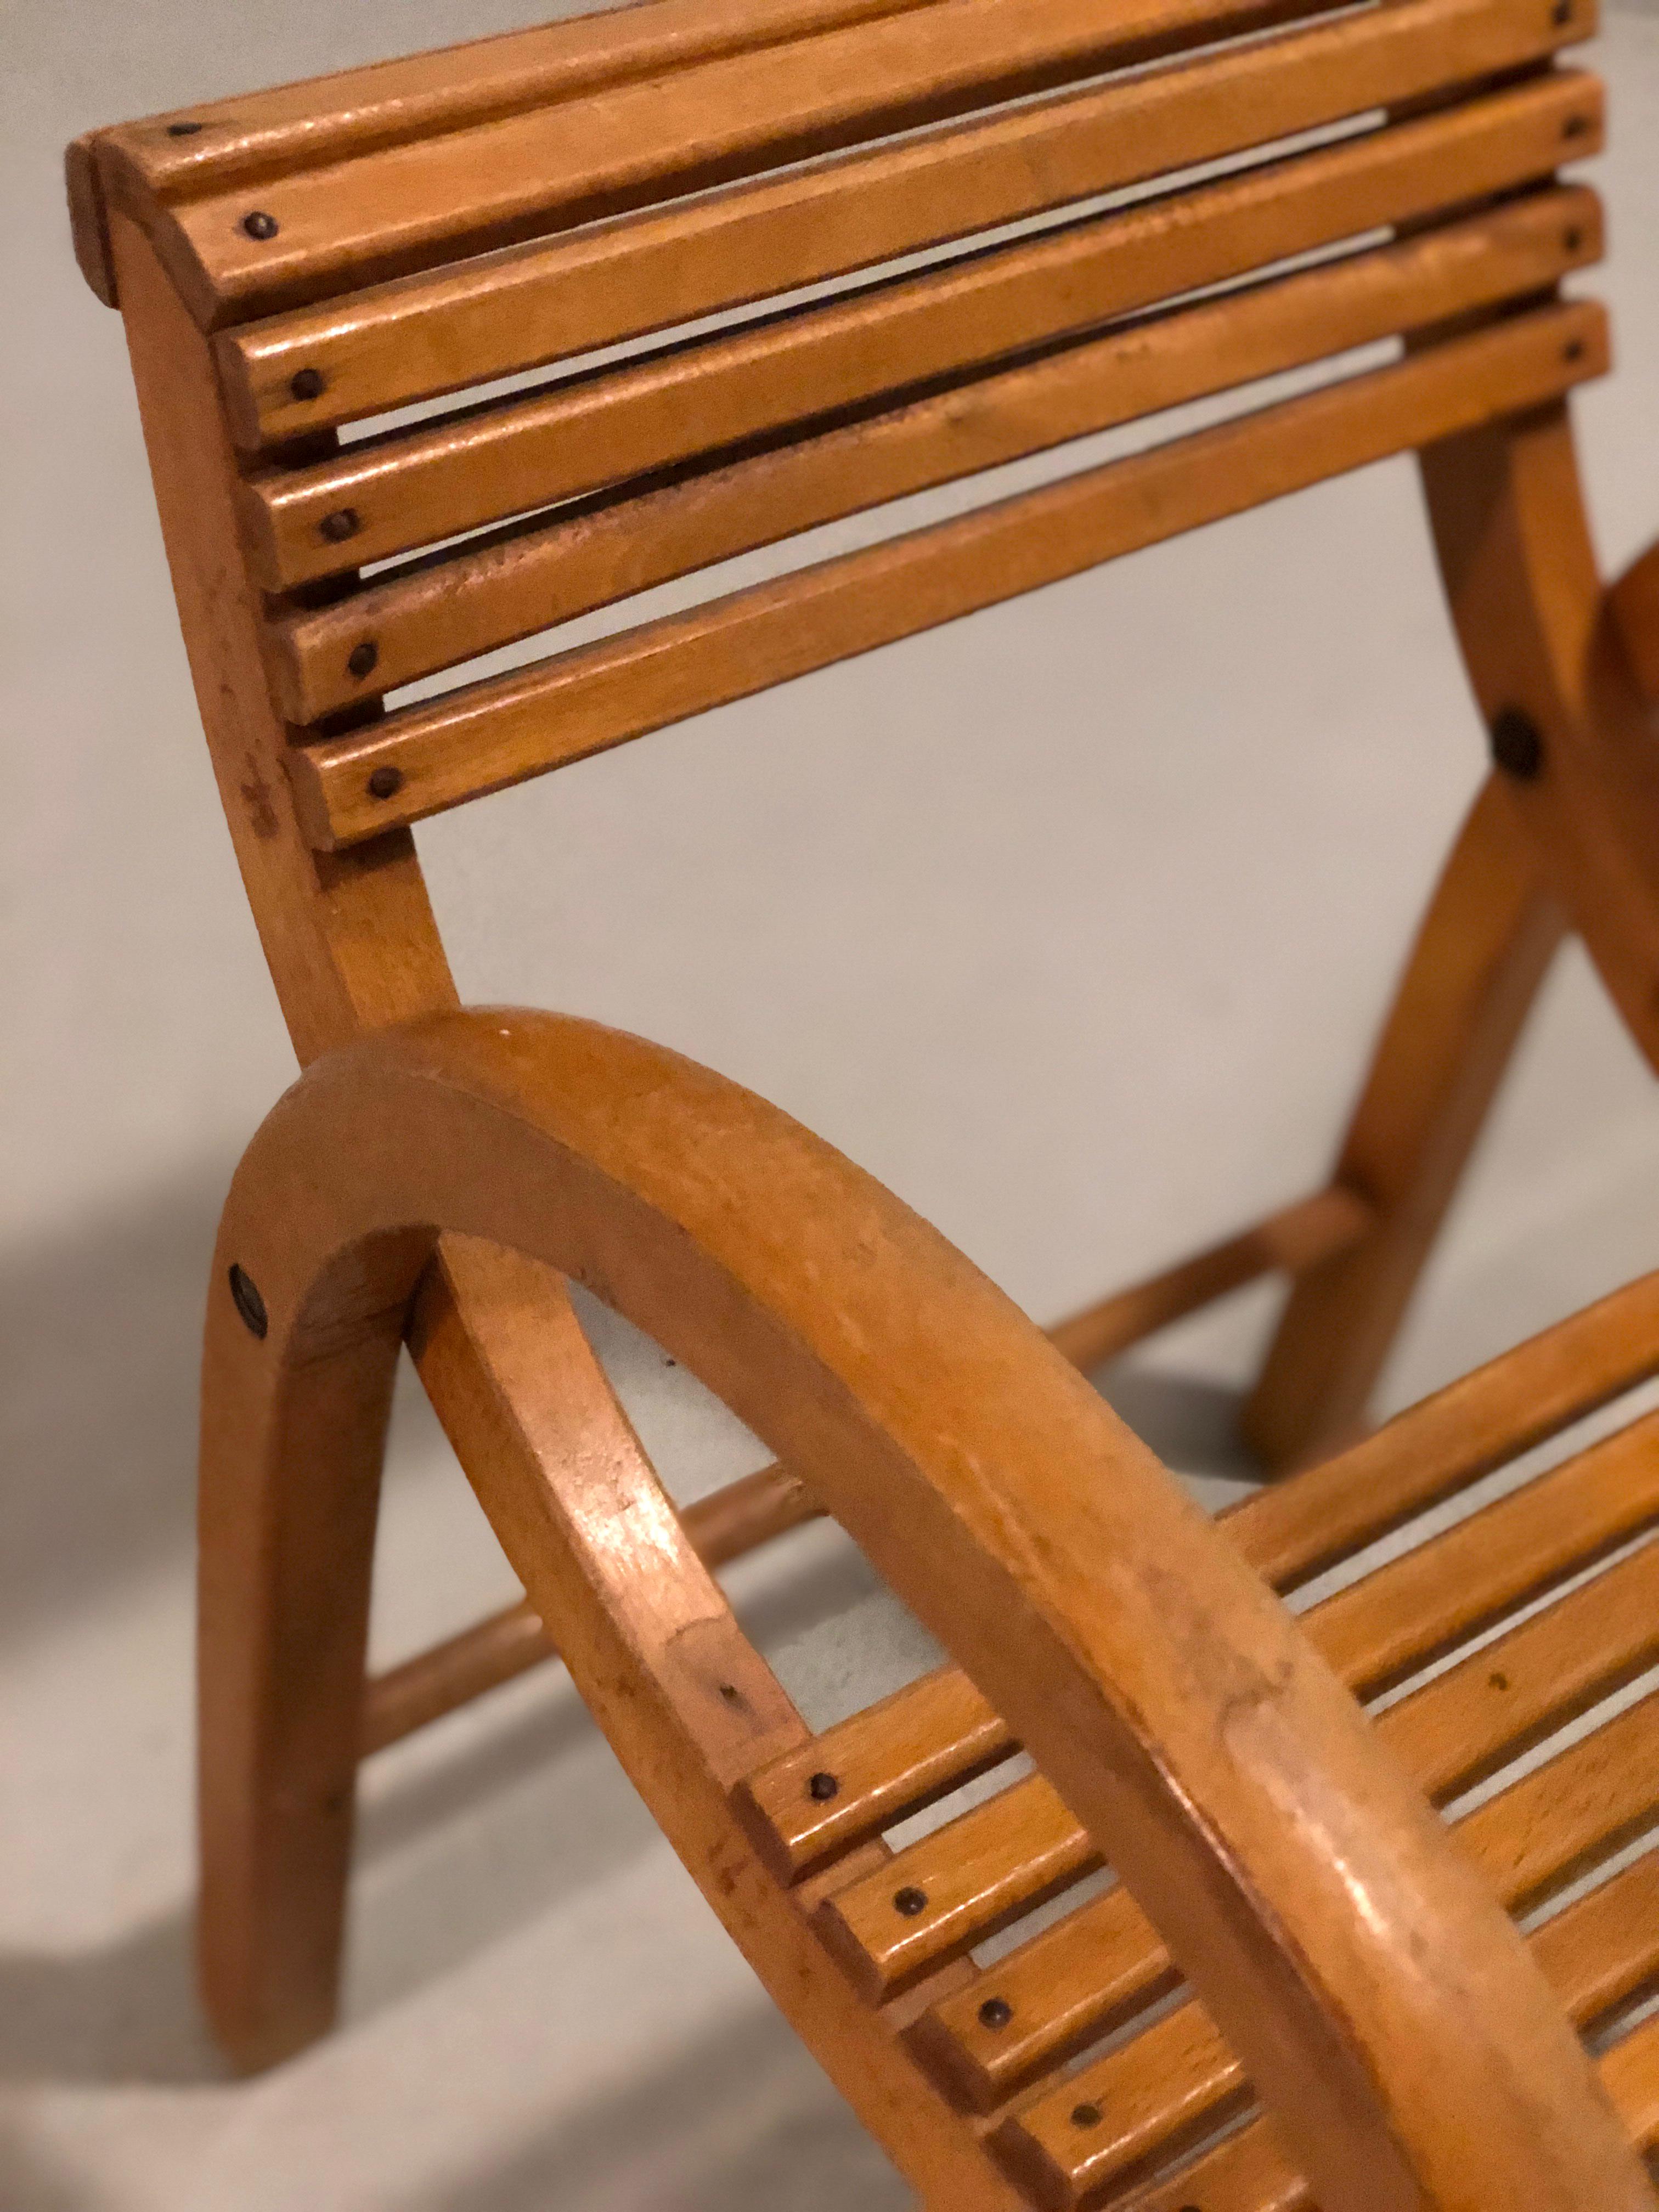 Baumann children's armchair 1930s - French modernist design Bentwood chair For Sale 4